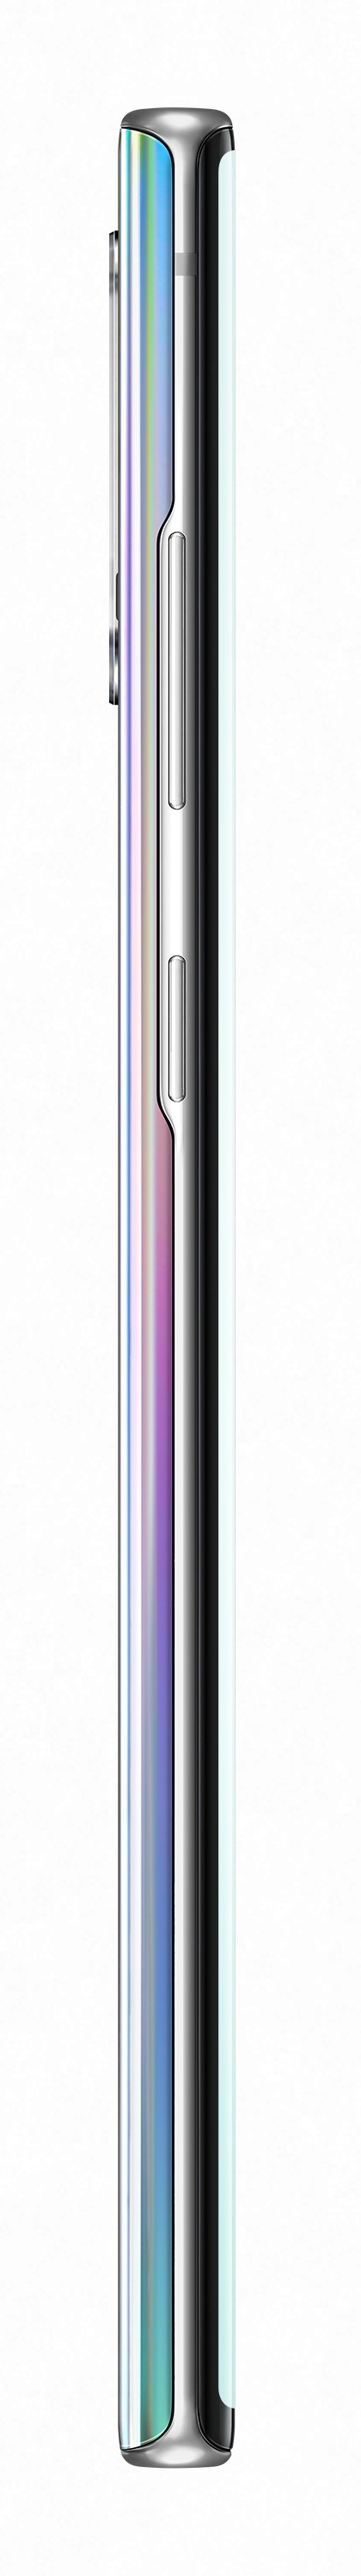 Samsung Galaxy Note10+ Smartphone 512GB Aura Glow